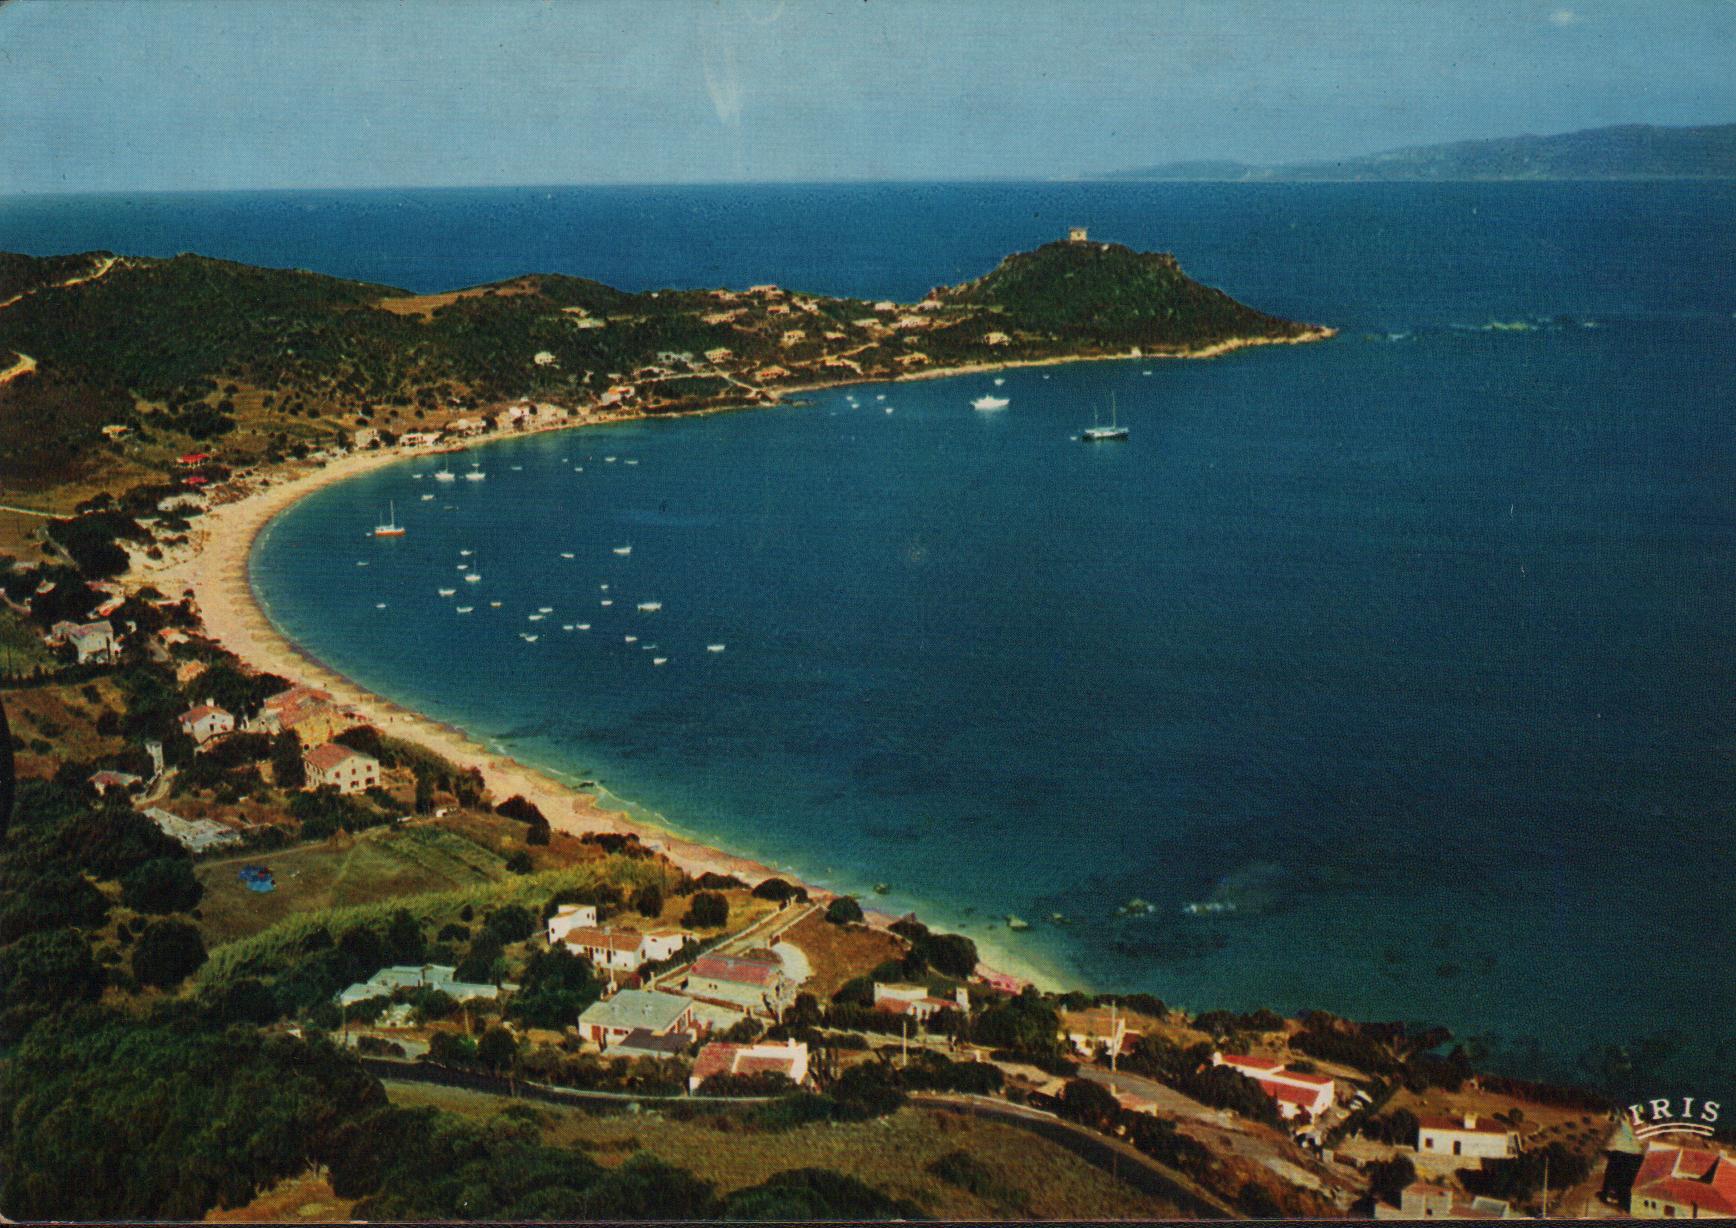 Cartes postales anciennes > CARTES POSTALES > carte postale ancienne > cartes-postales-ancienne.com Corse  Corse du sud 2a Campo